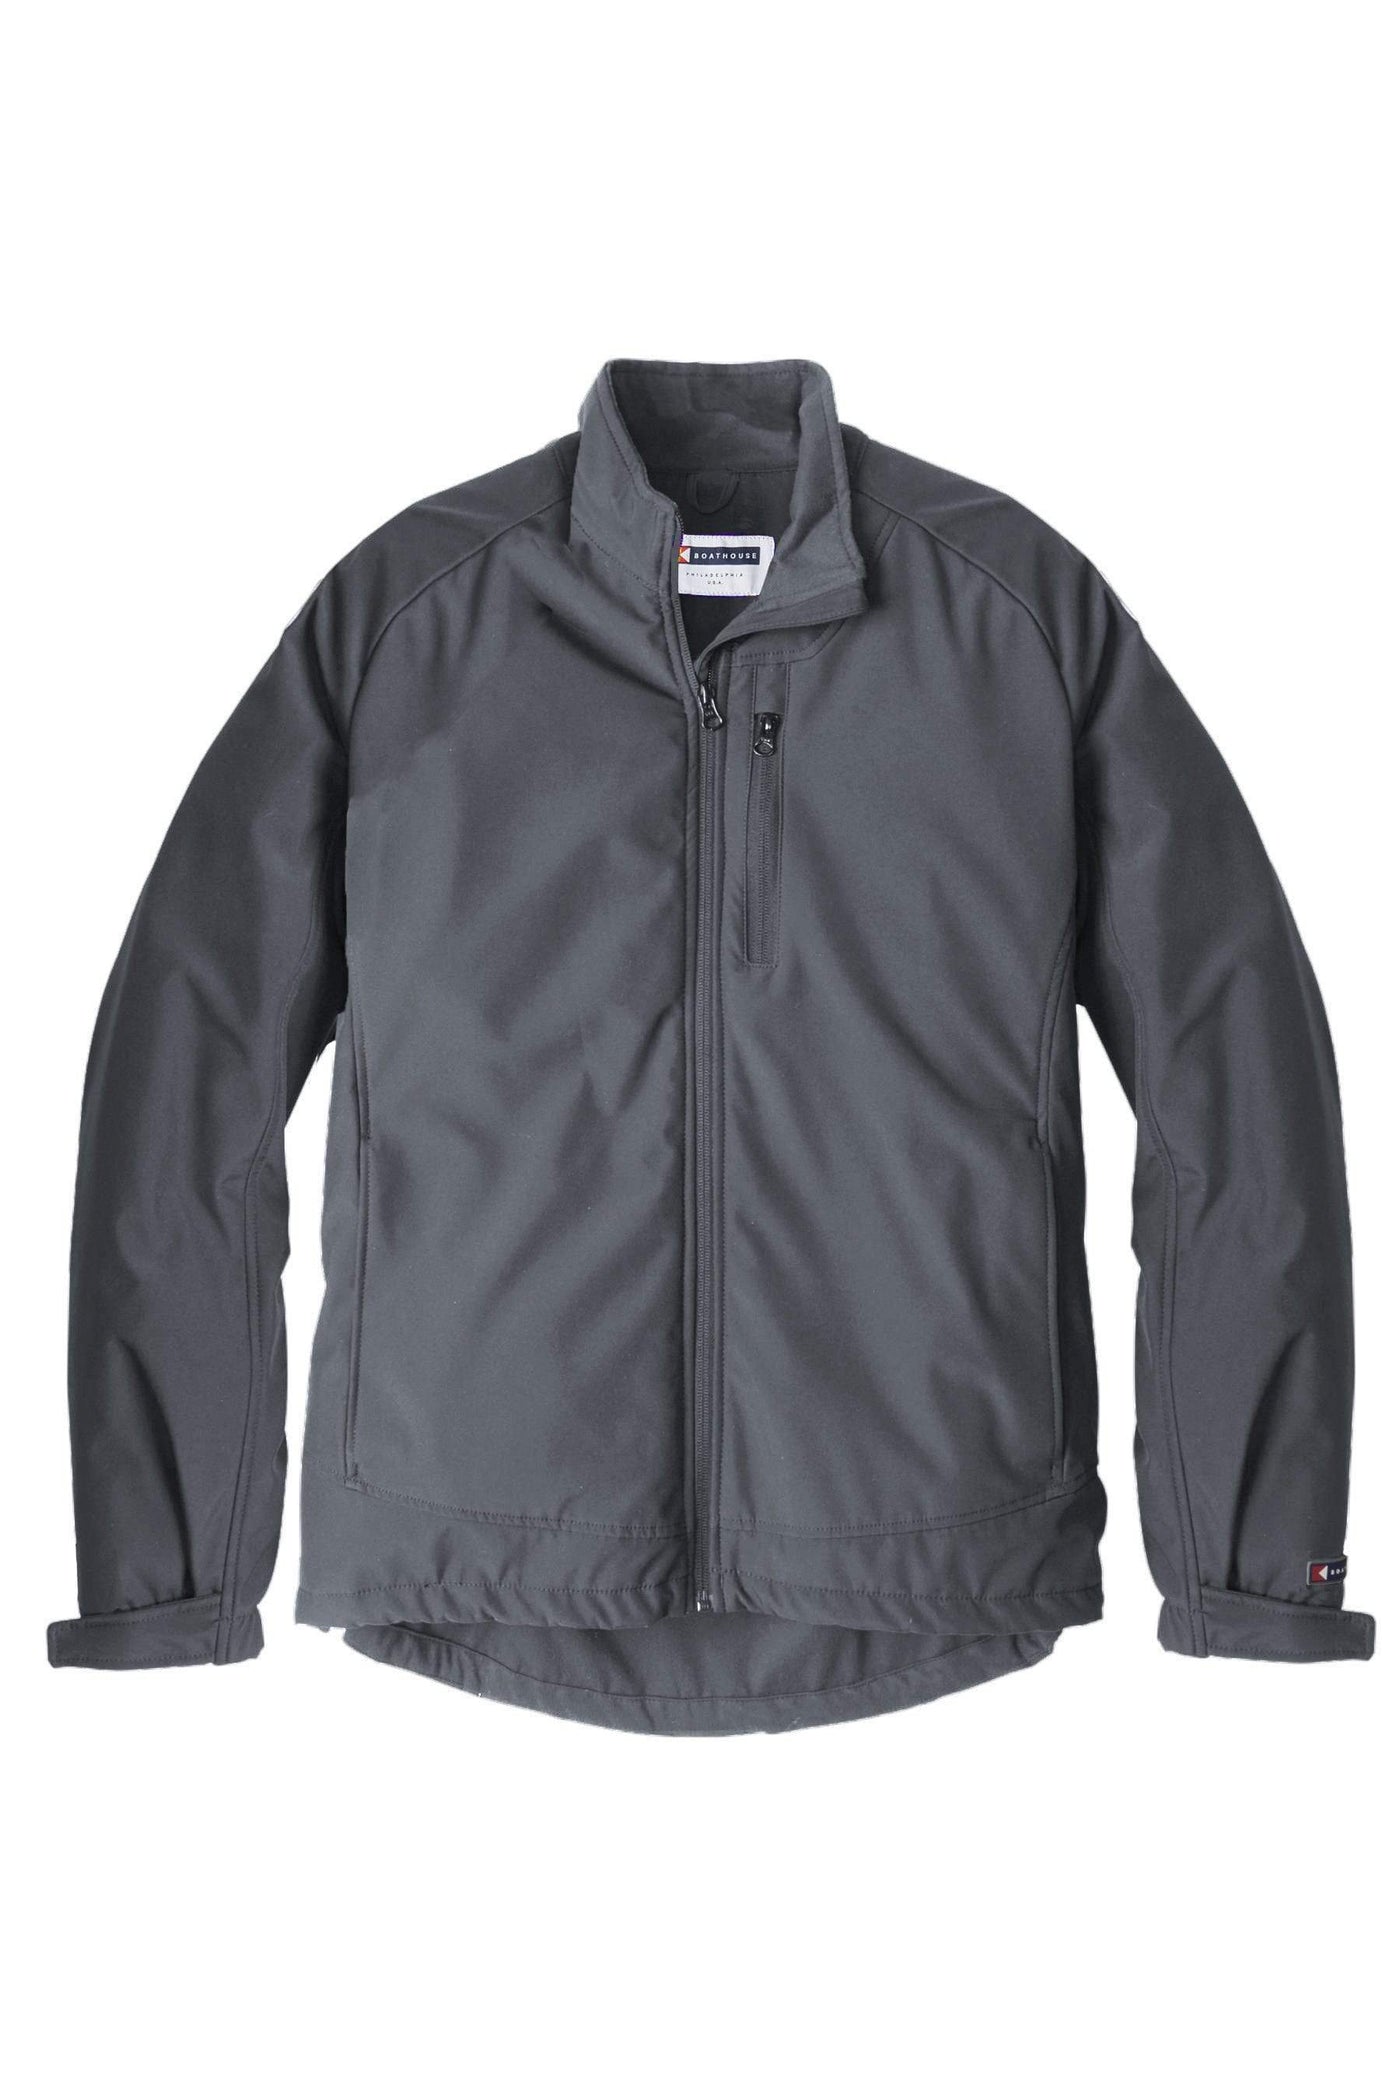 Men's Equinox Soft Shell Jacket Graphite / Small